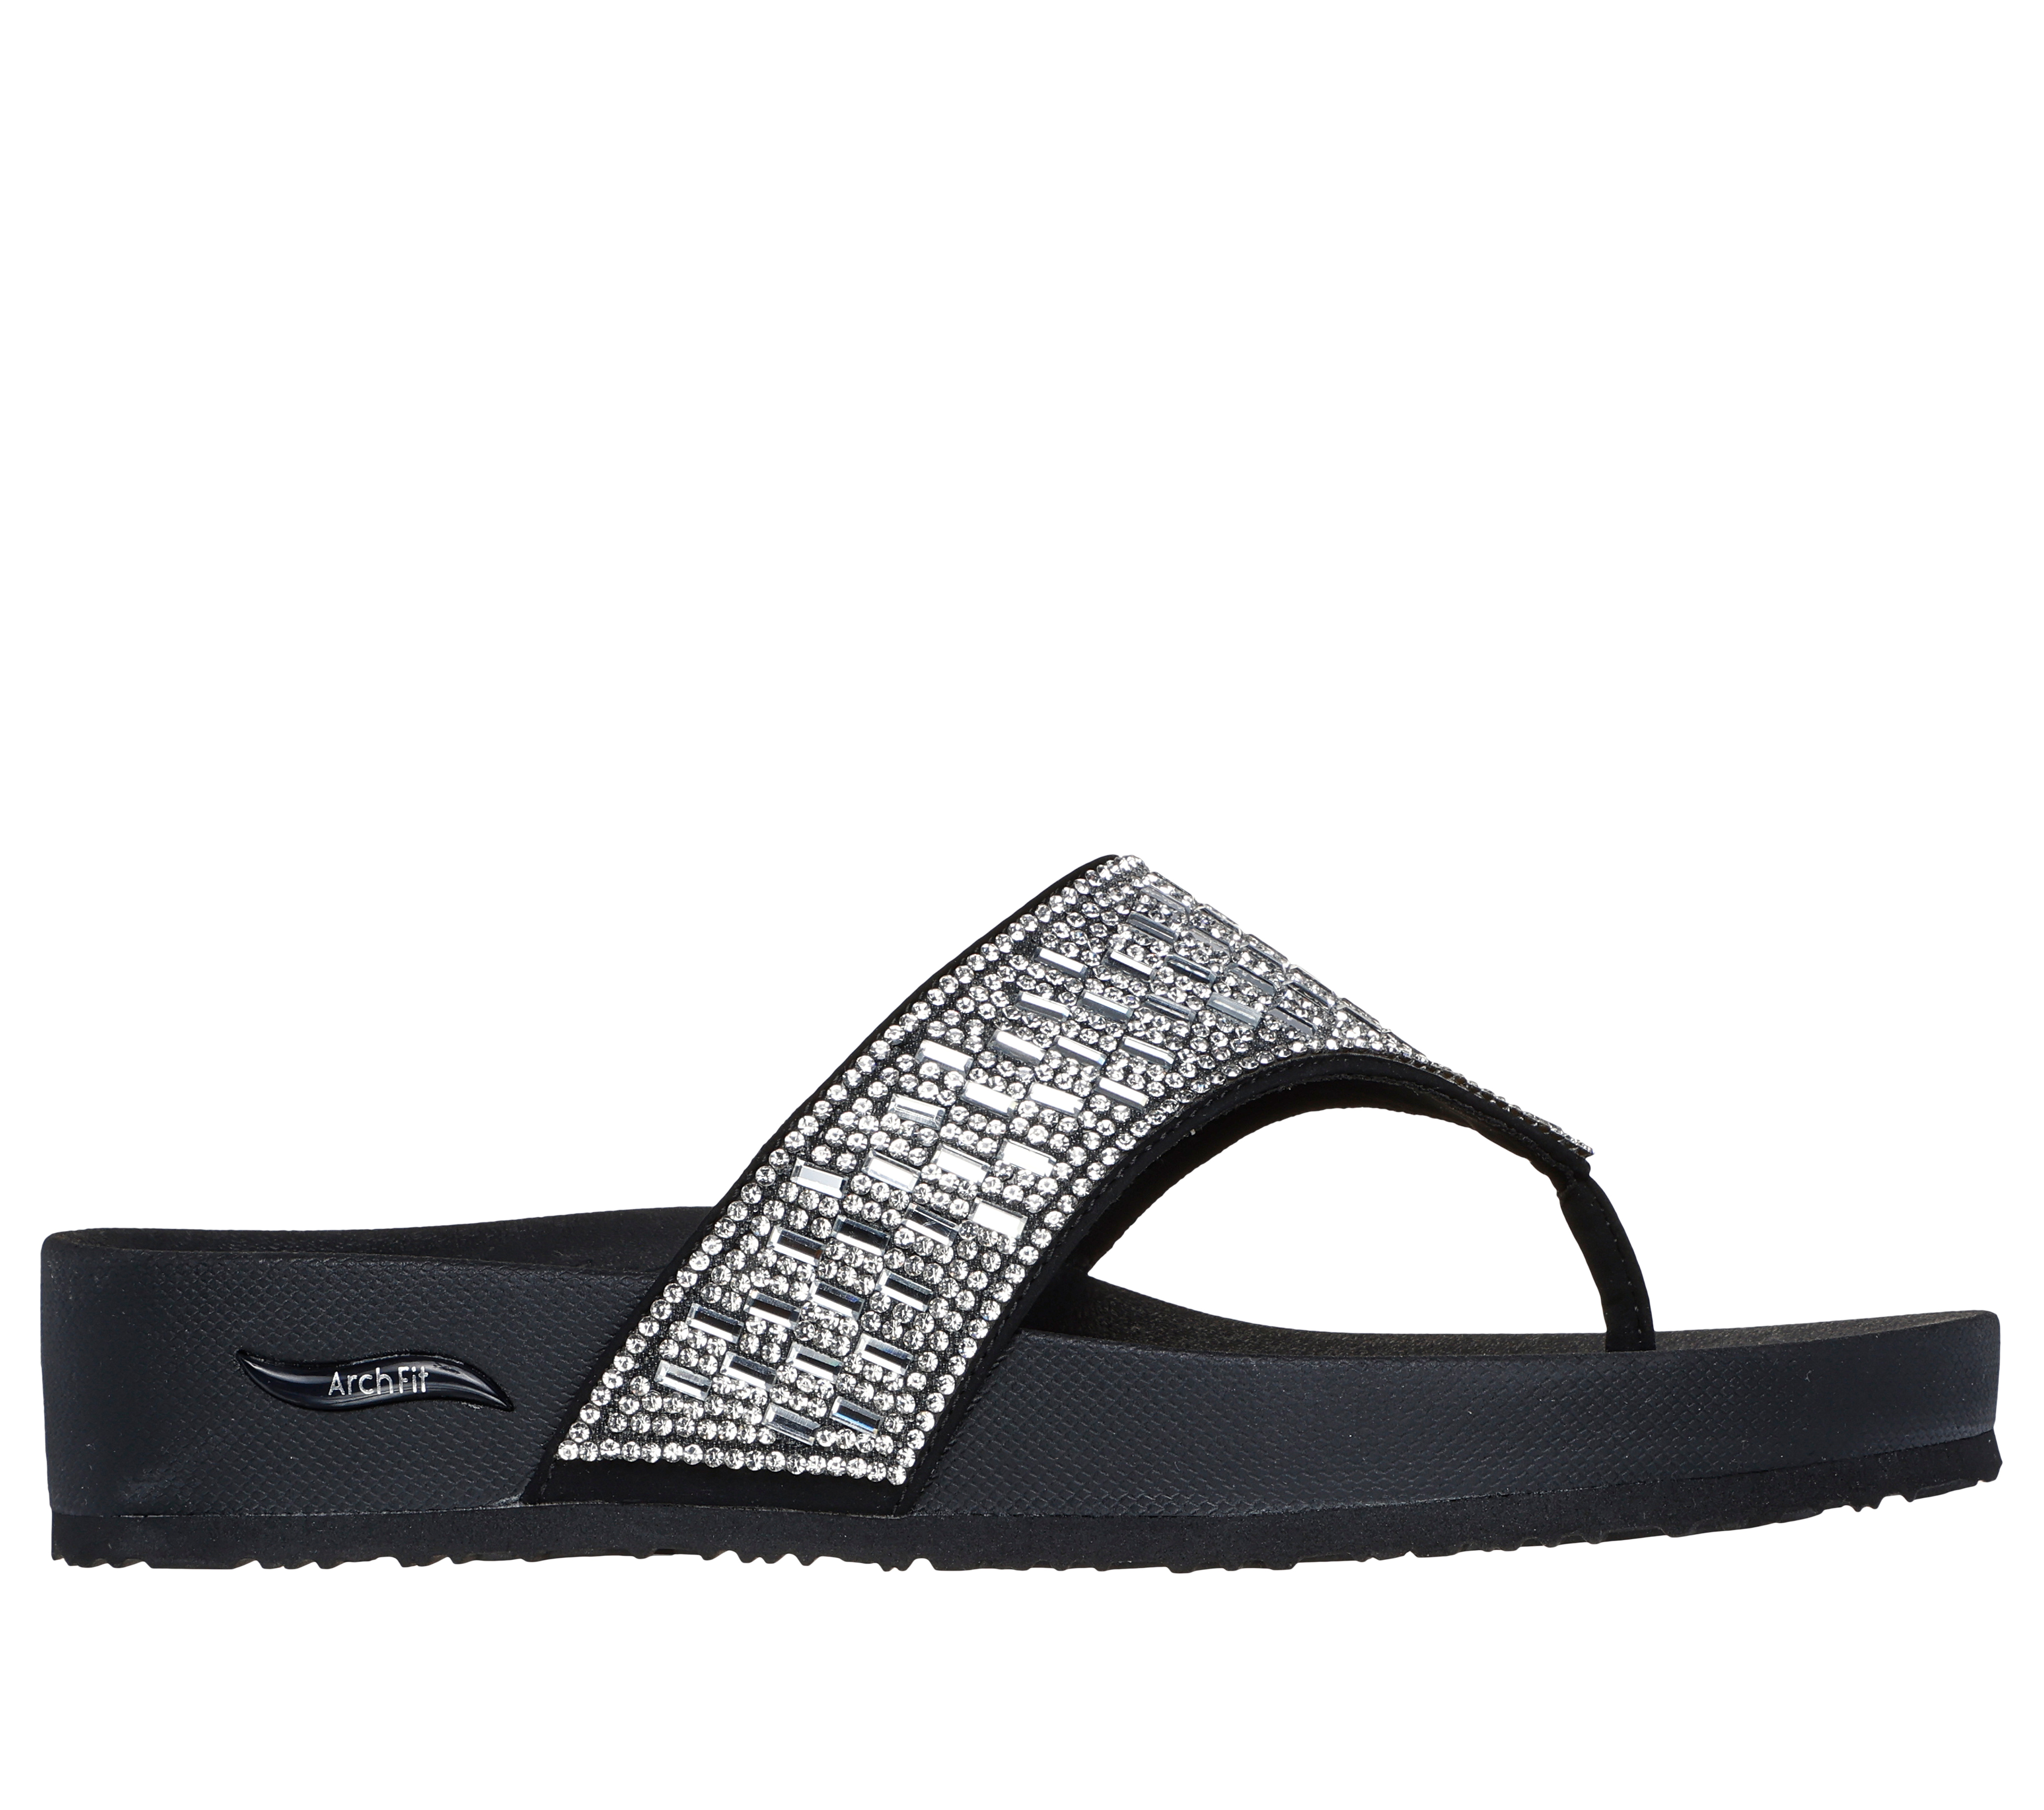 Skechers Yoga Mat Comfort Vinyasa Stone black/ silver Thong Sandal Womens  size 8